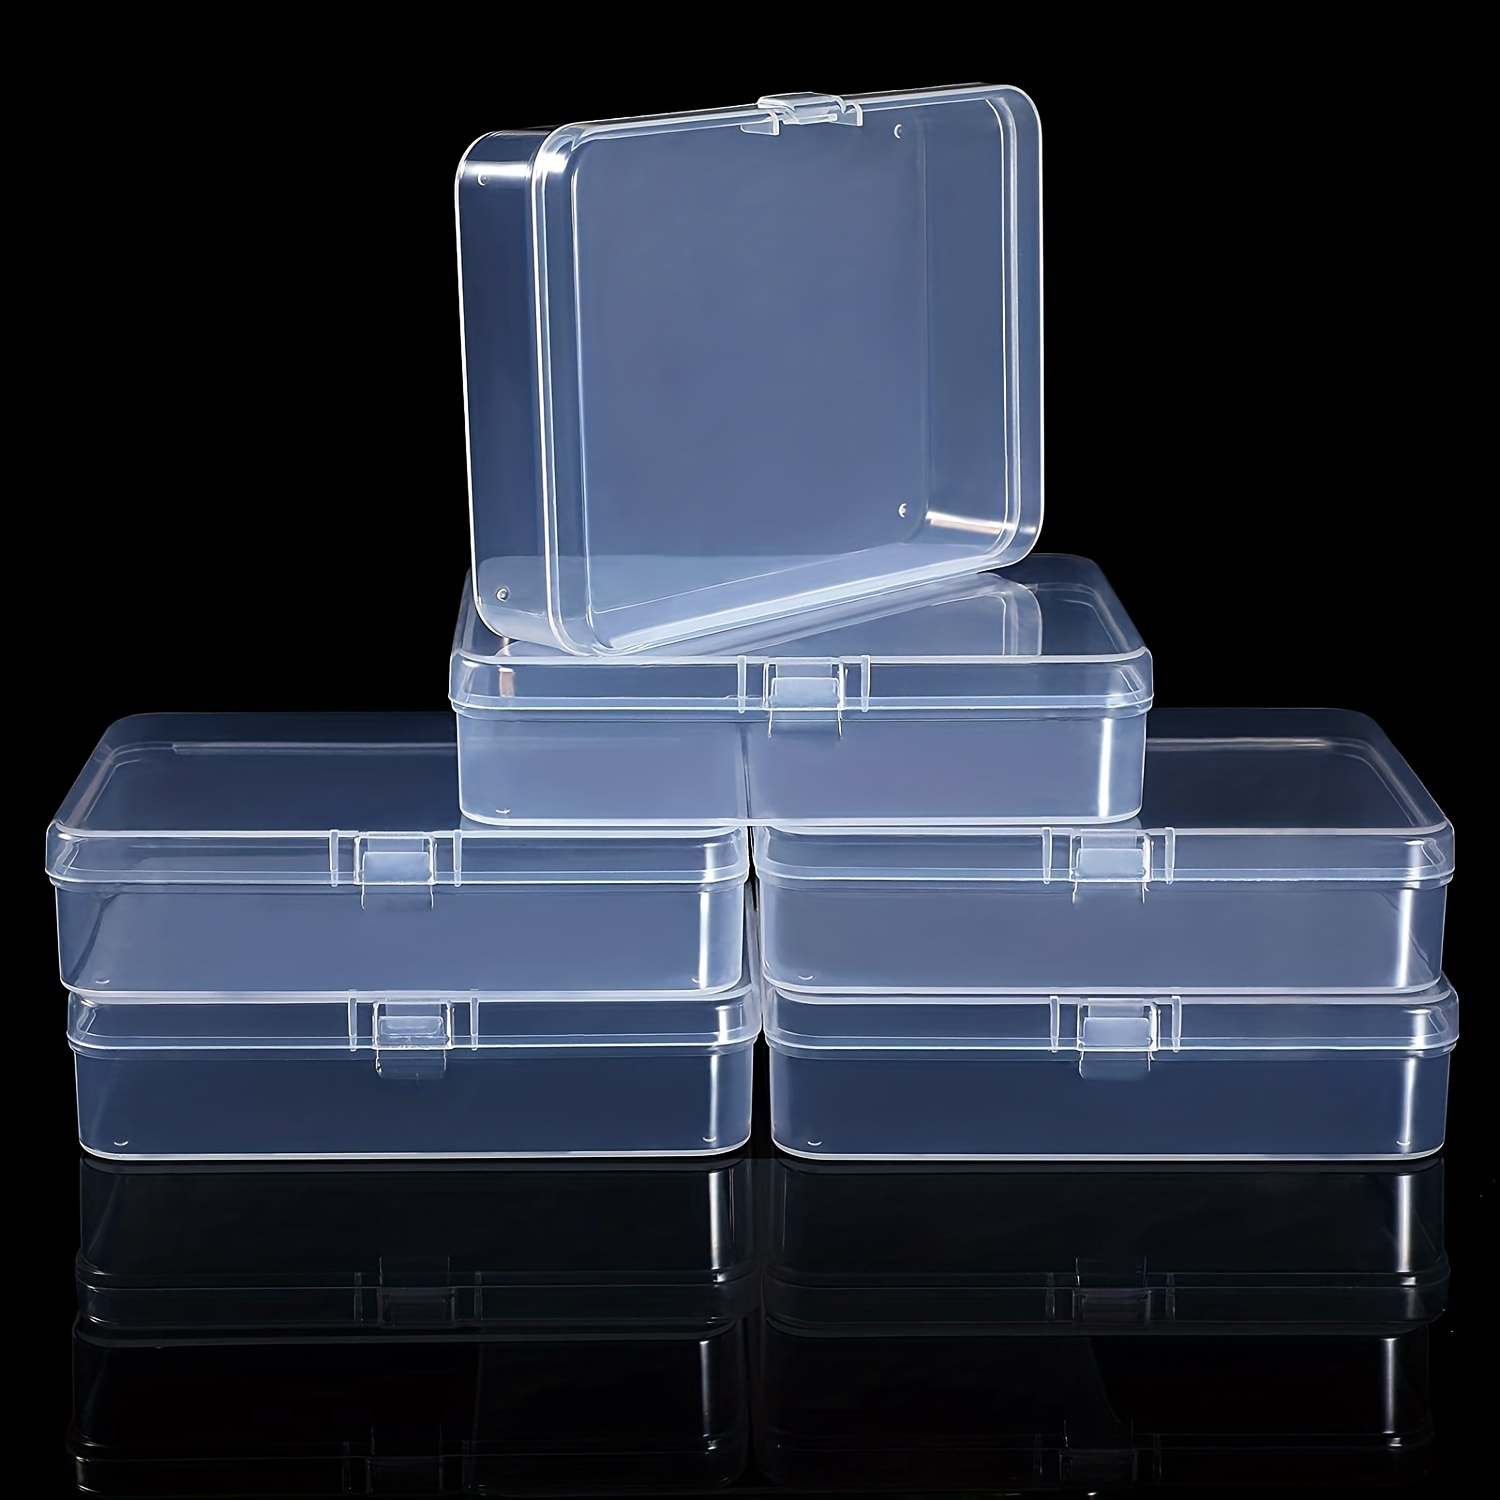 1pc Scrapbook Storage Box, Dustproof Accessory Storage Container